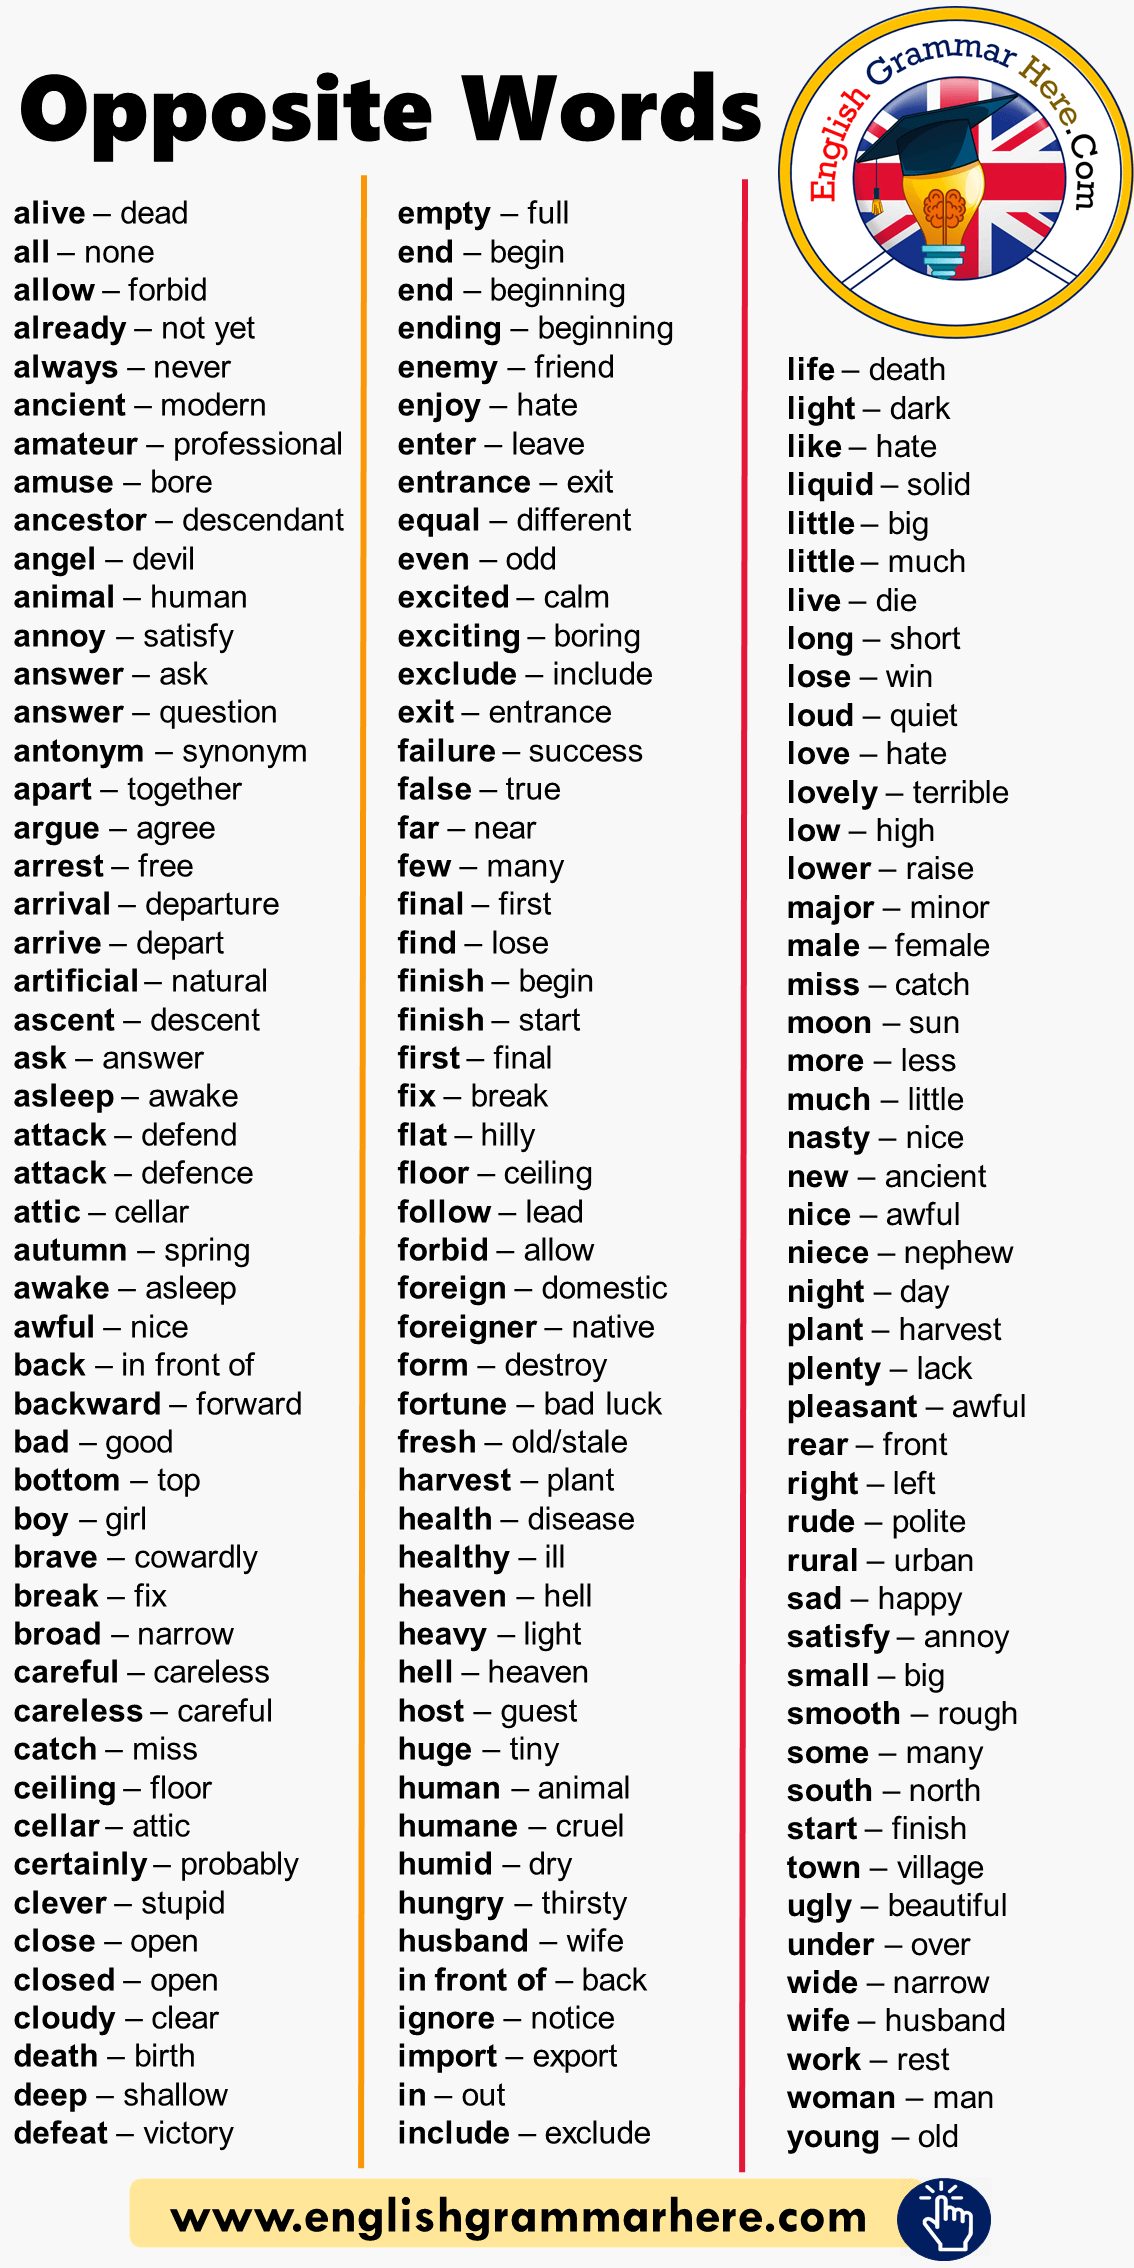 English Common Opposite Words List